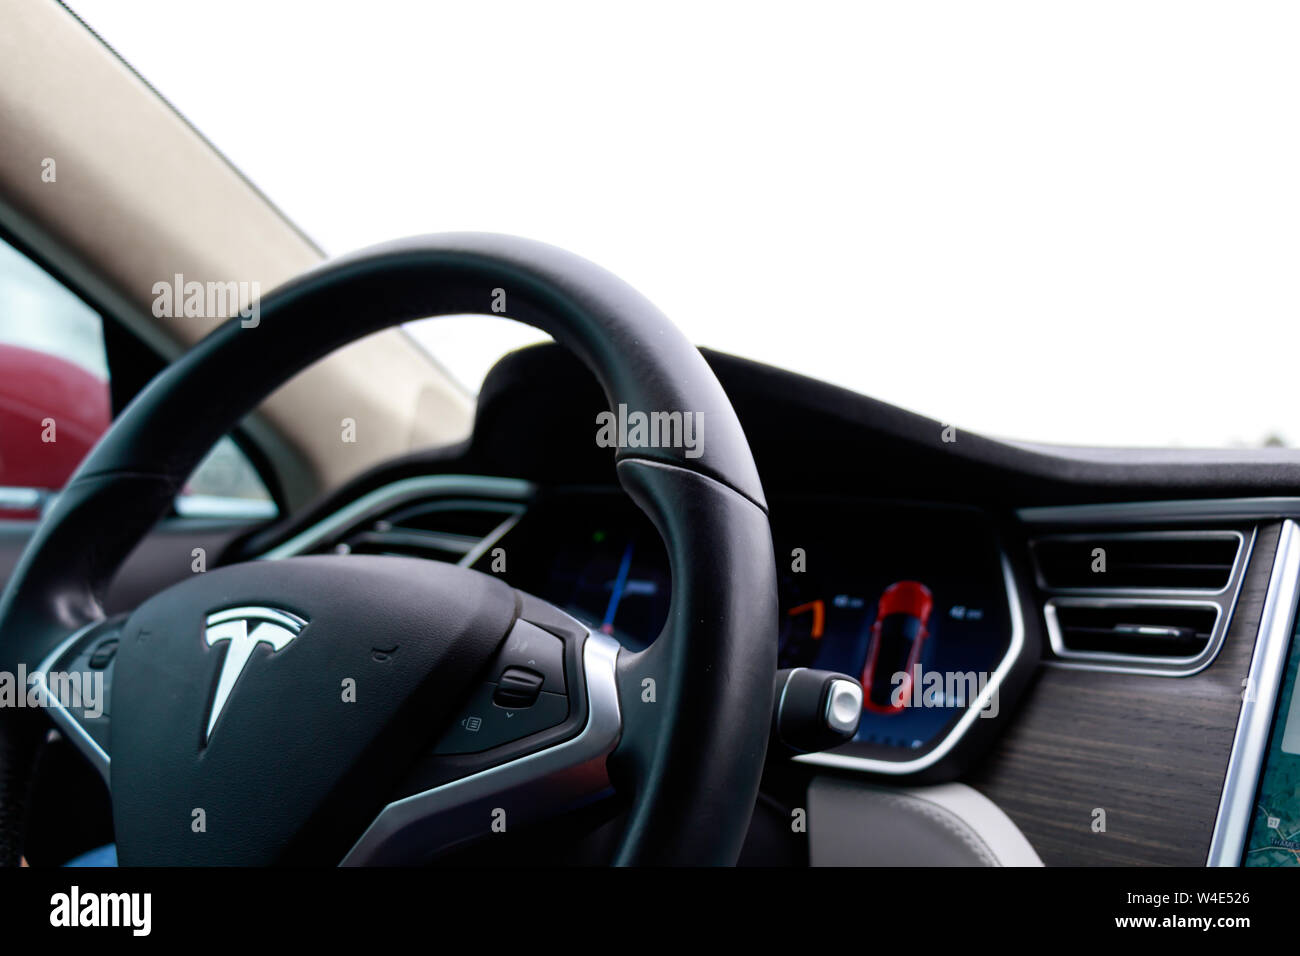 Tesla Model S Interior Steering Wheel And Dashboard Seen